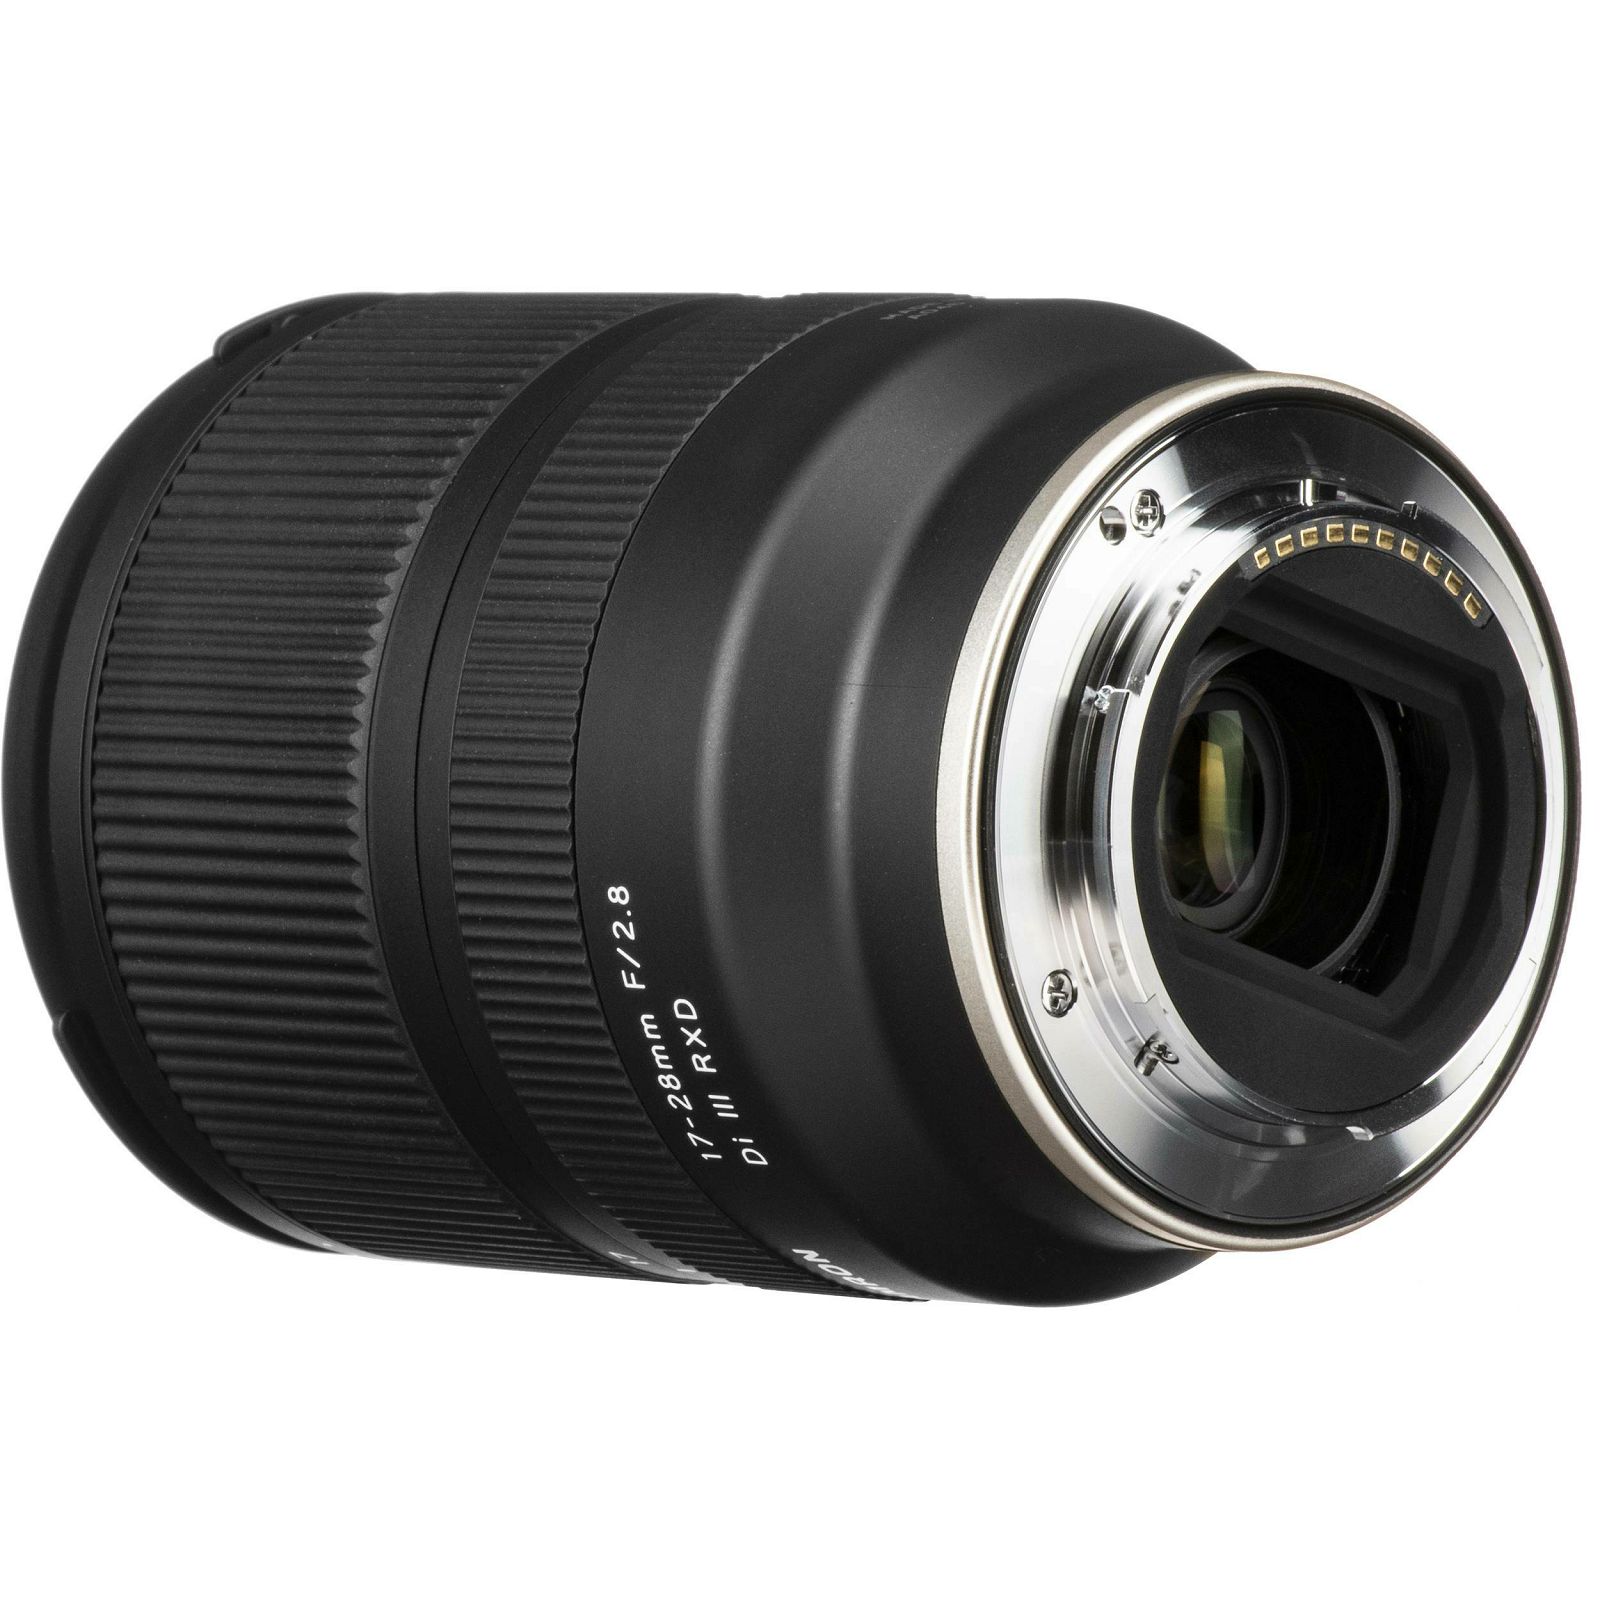 Tamron 17-28mm f/2.8 Di III RXD širokokutni objektiv za Sony E-mount (A046SF)